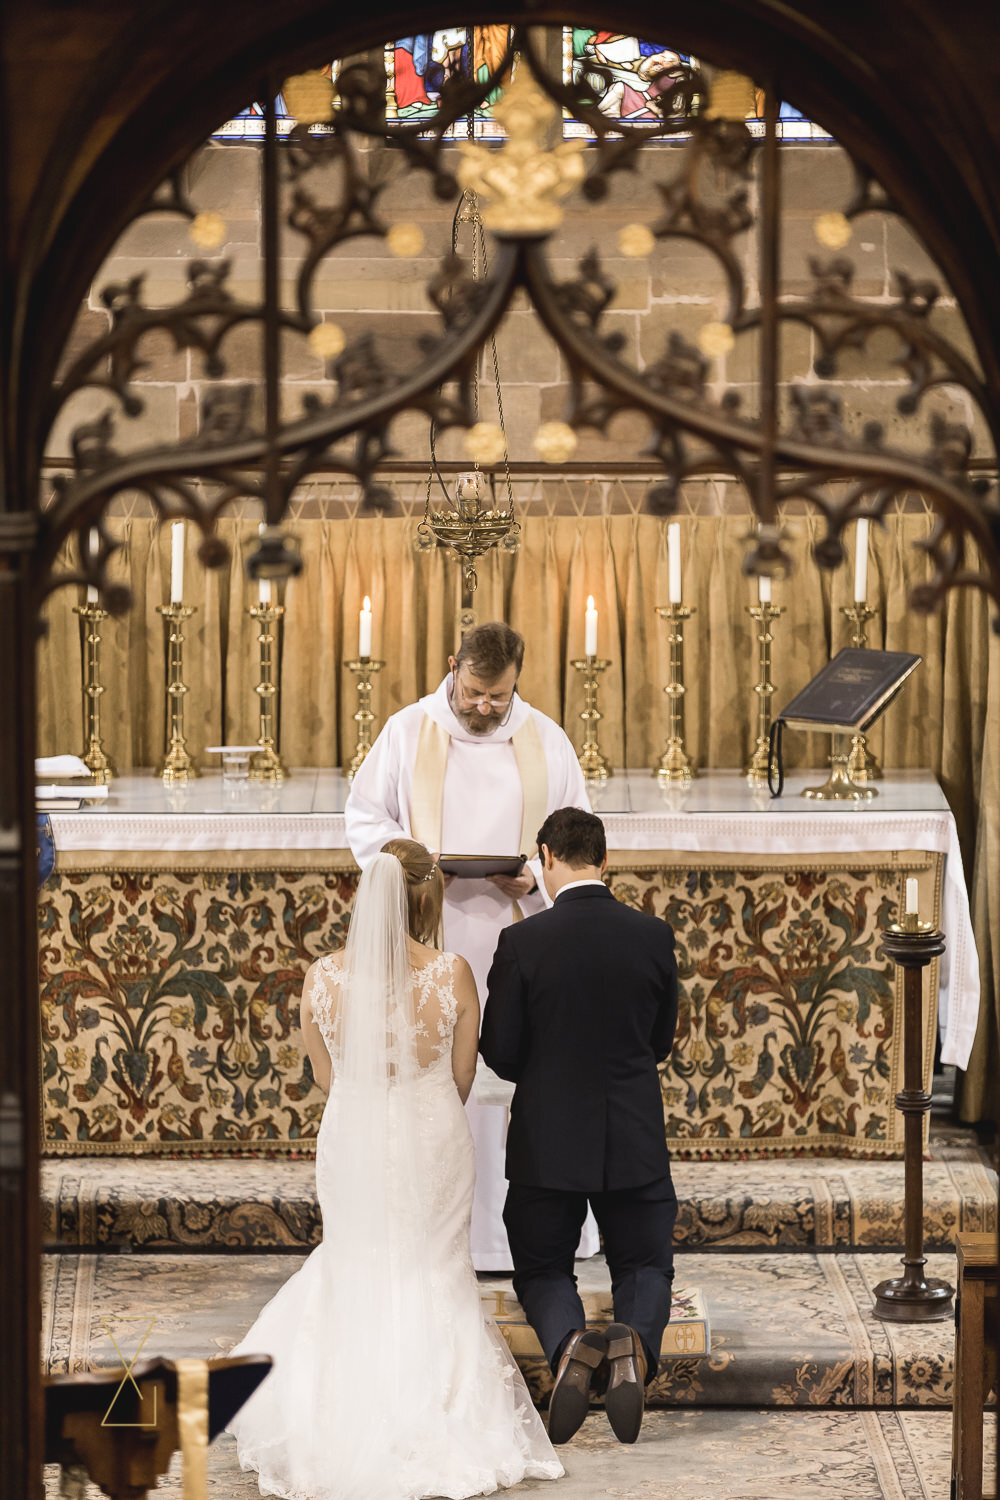 Bride-and-groom-kneeling-at-altar-Gawsworth-church